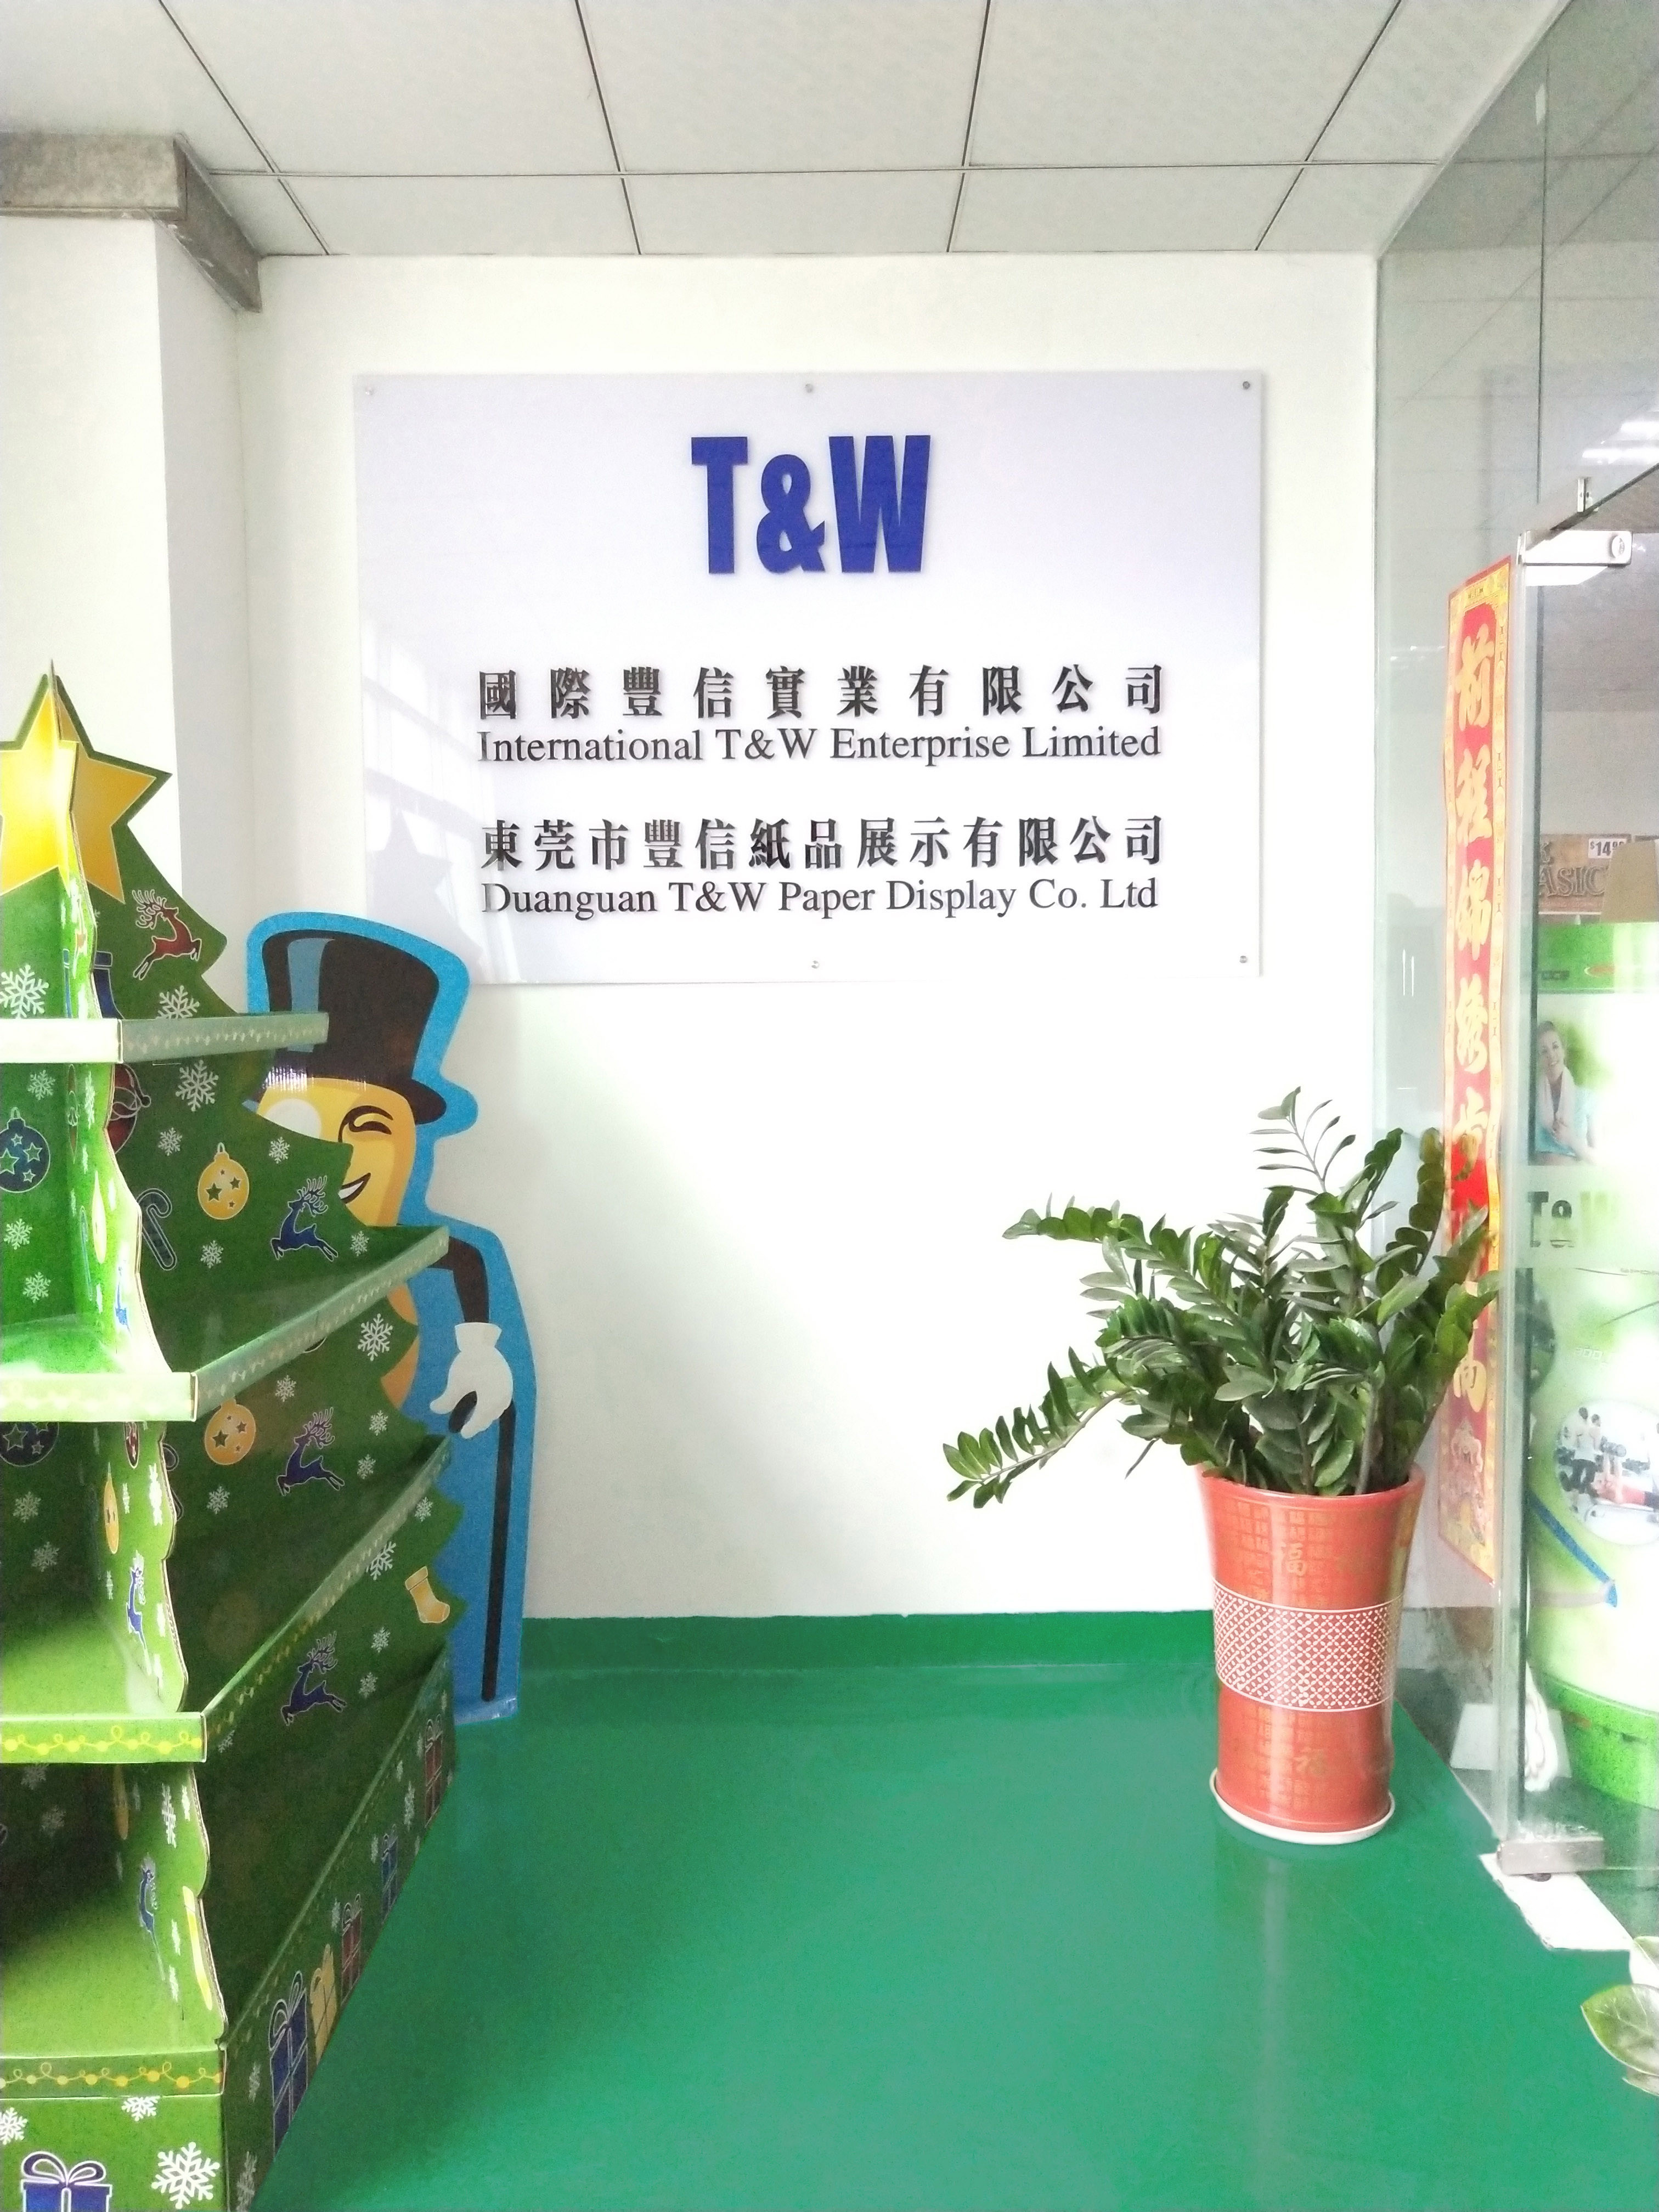 International T&W Enterprise Limited